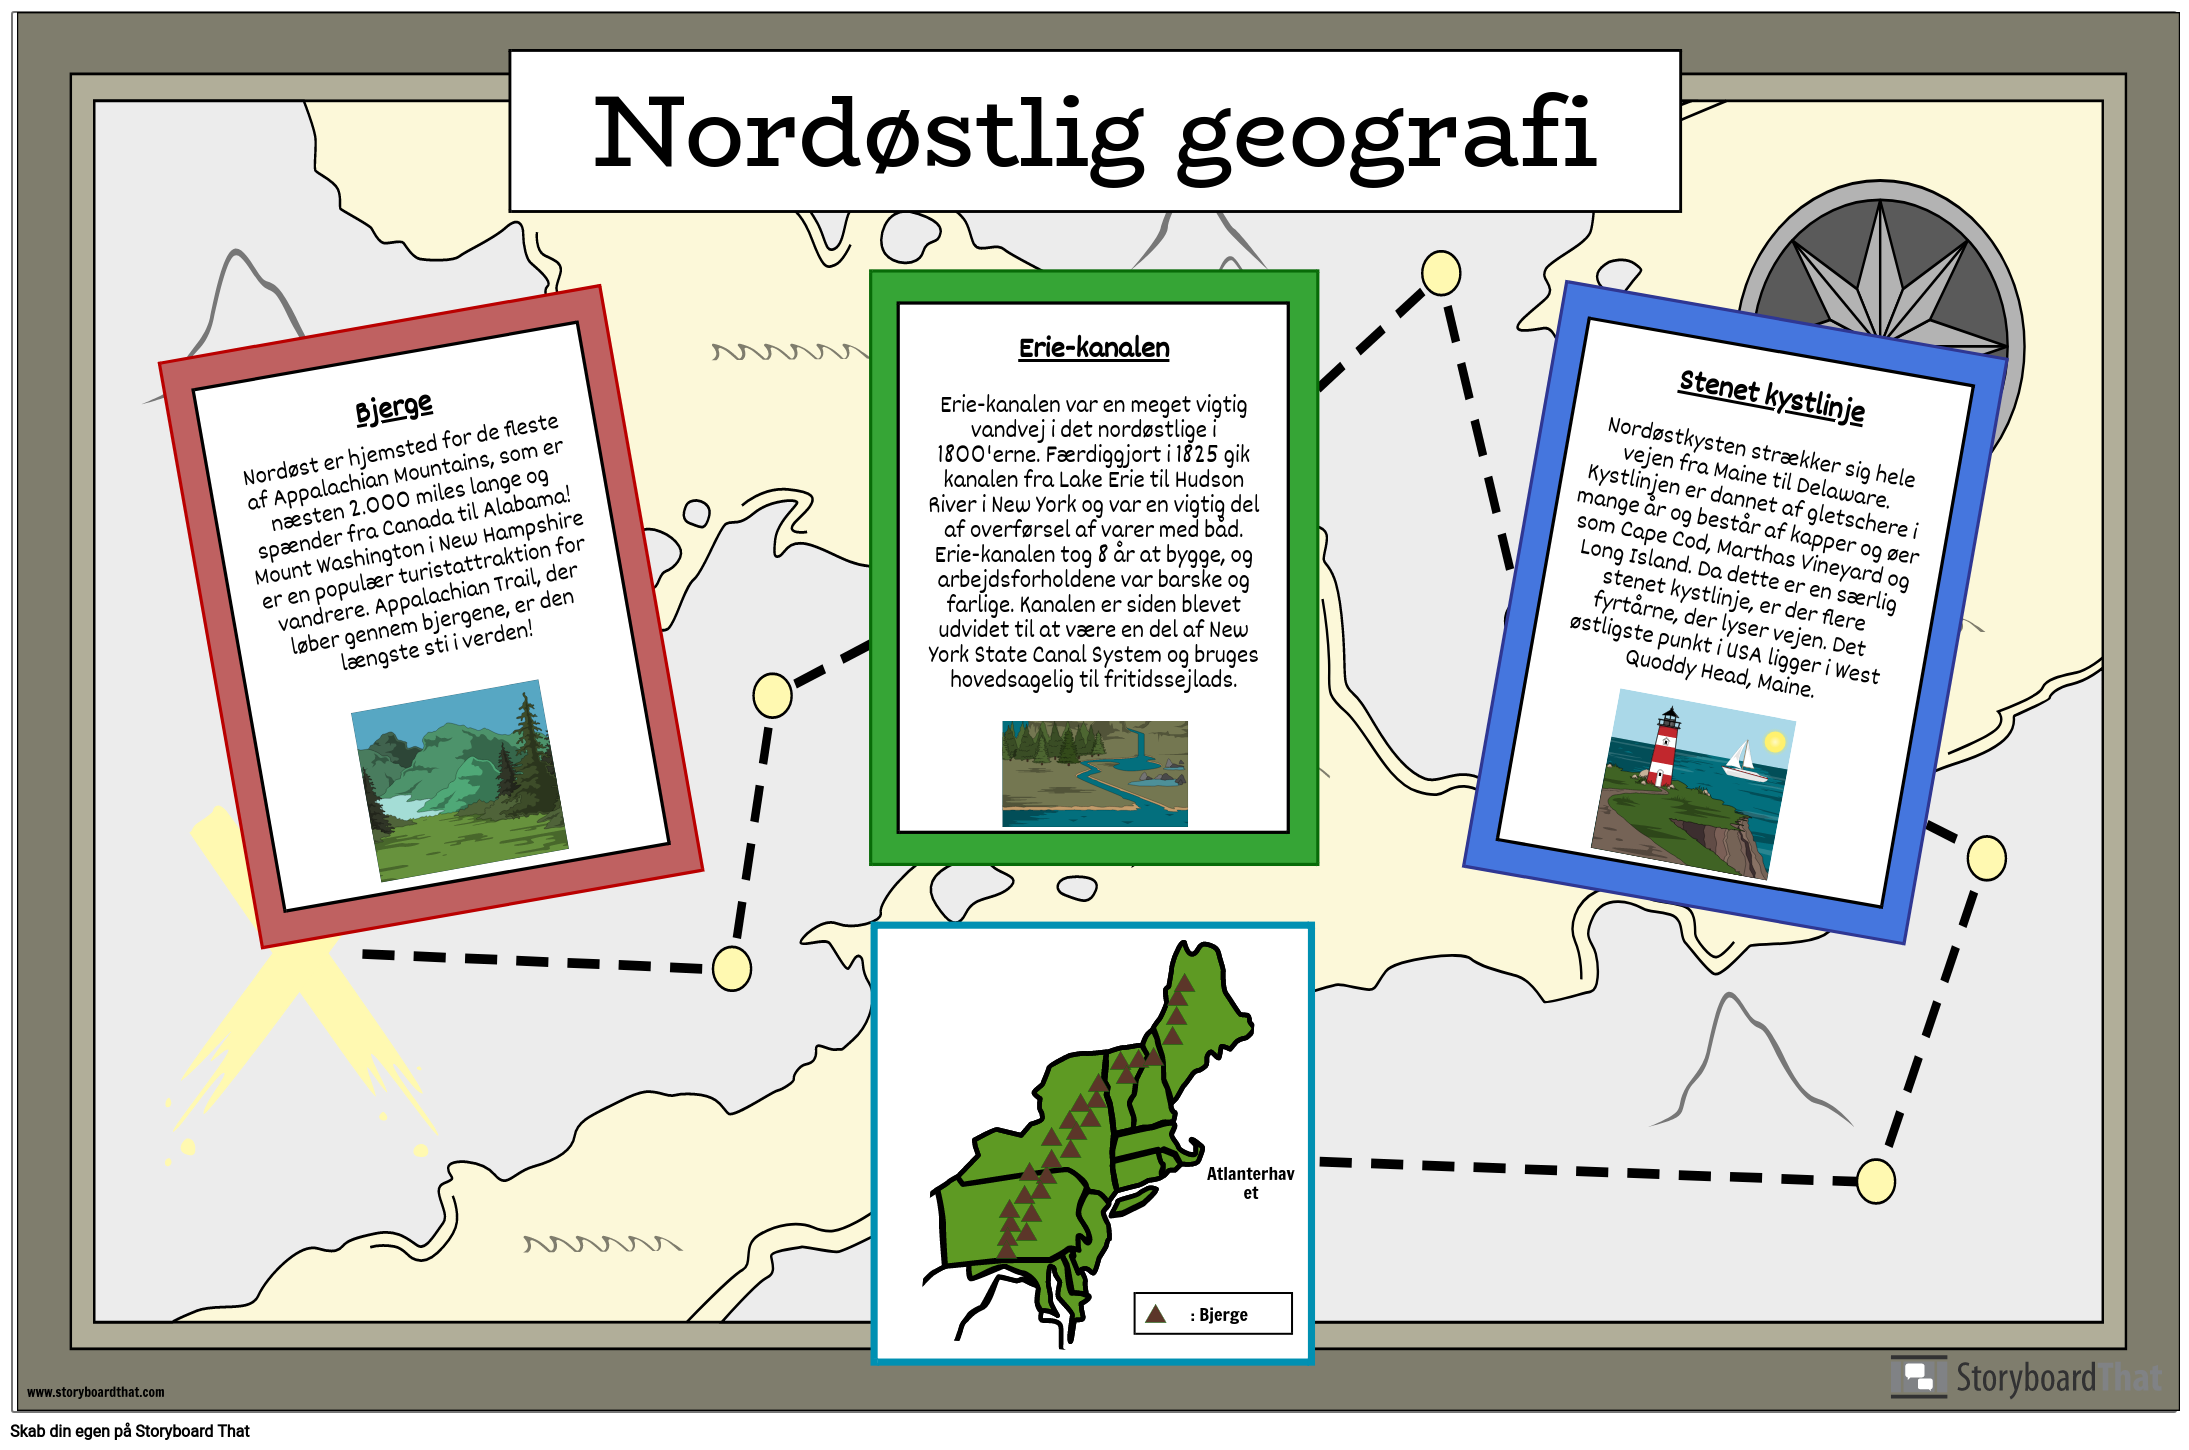 Nordøstlig Geografi